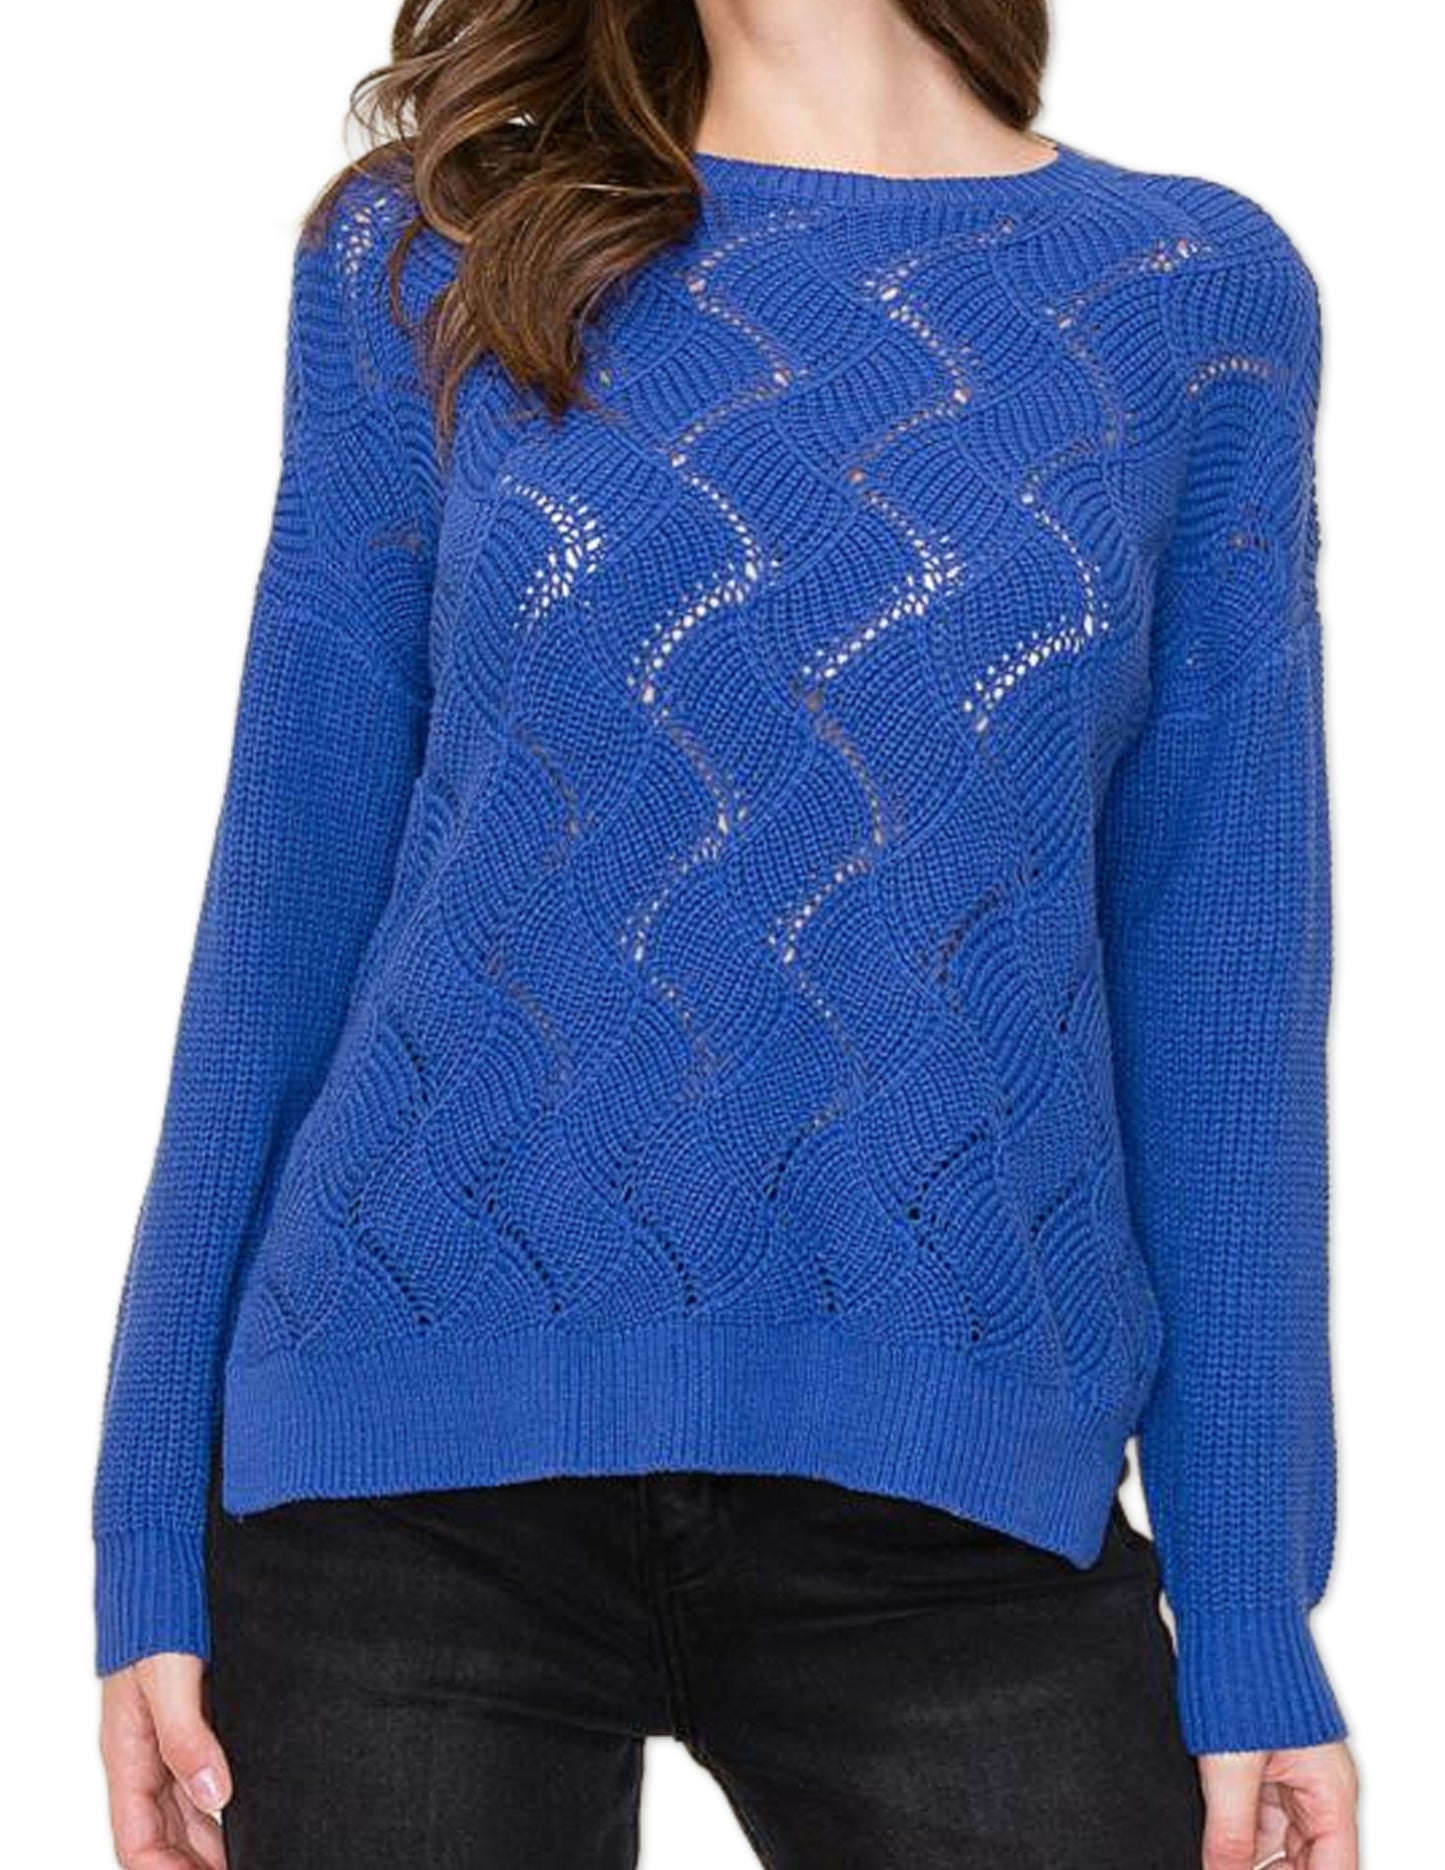 Crochet Detail Sweater - Royal